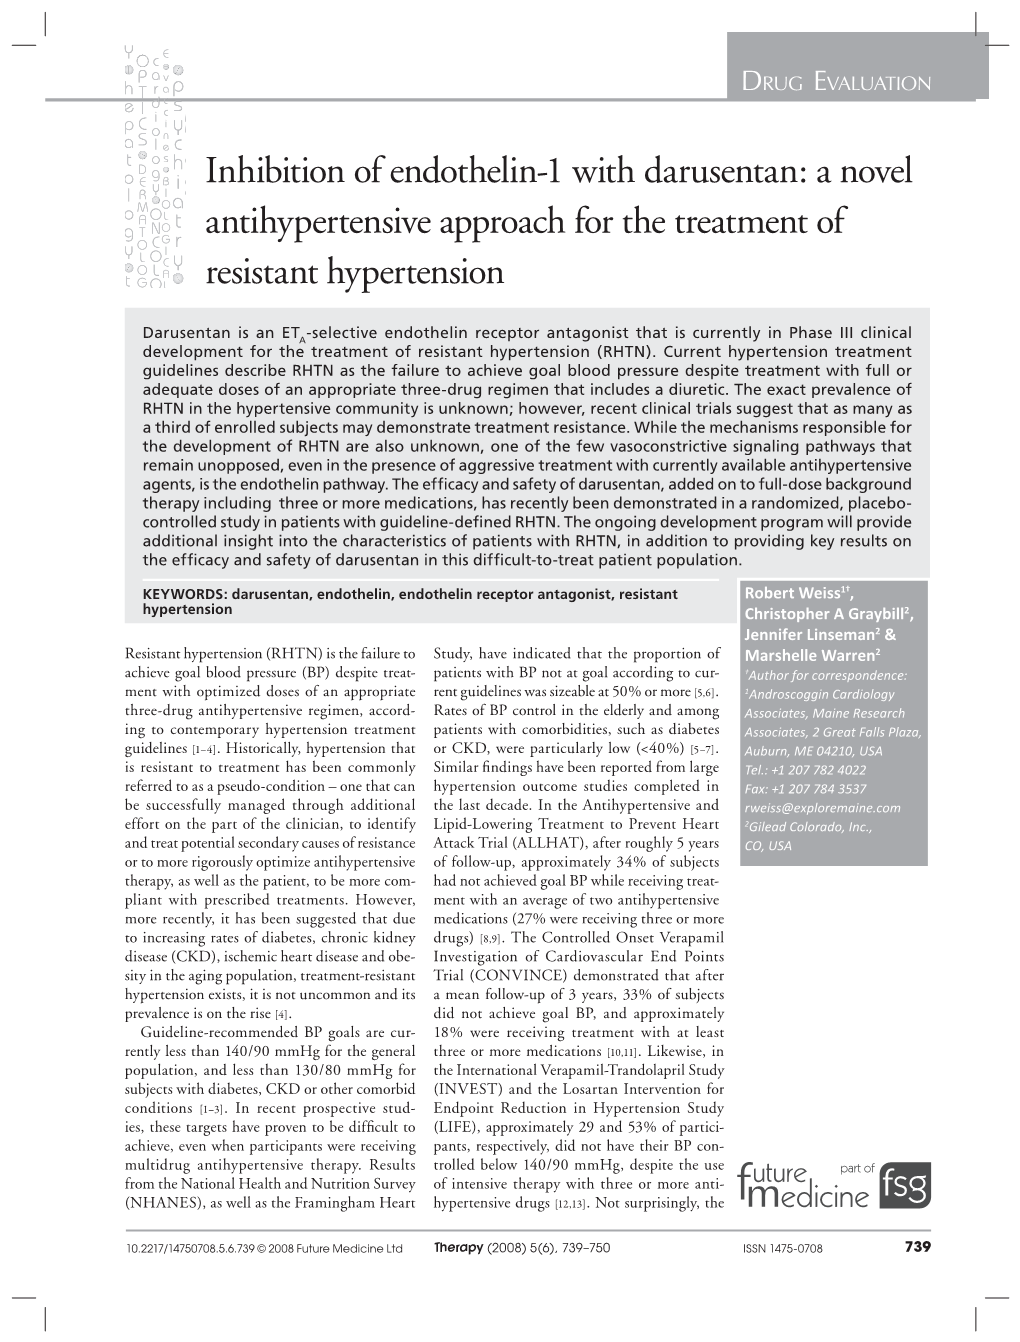 Darusentan: a Novel Antihypertensive Approach for the Treatment of Resistant Hypertension